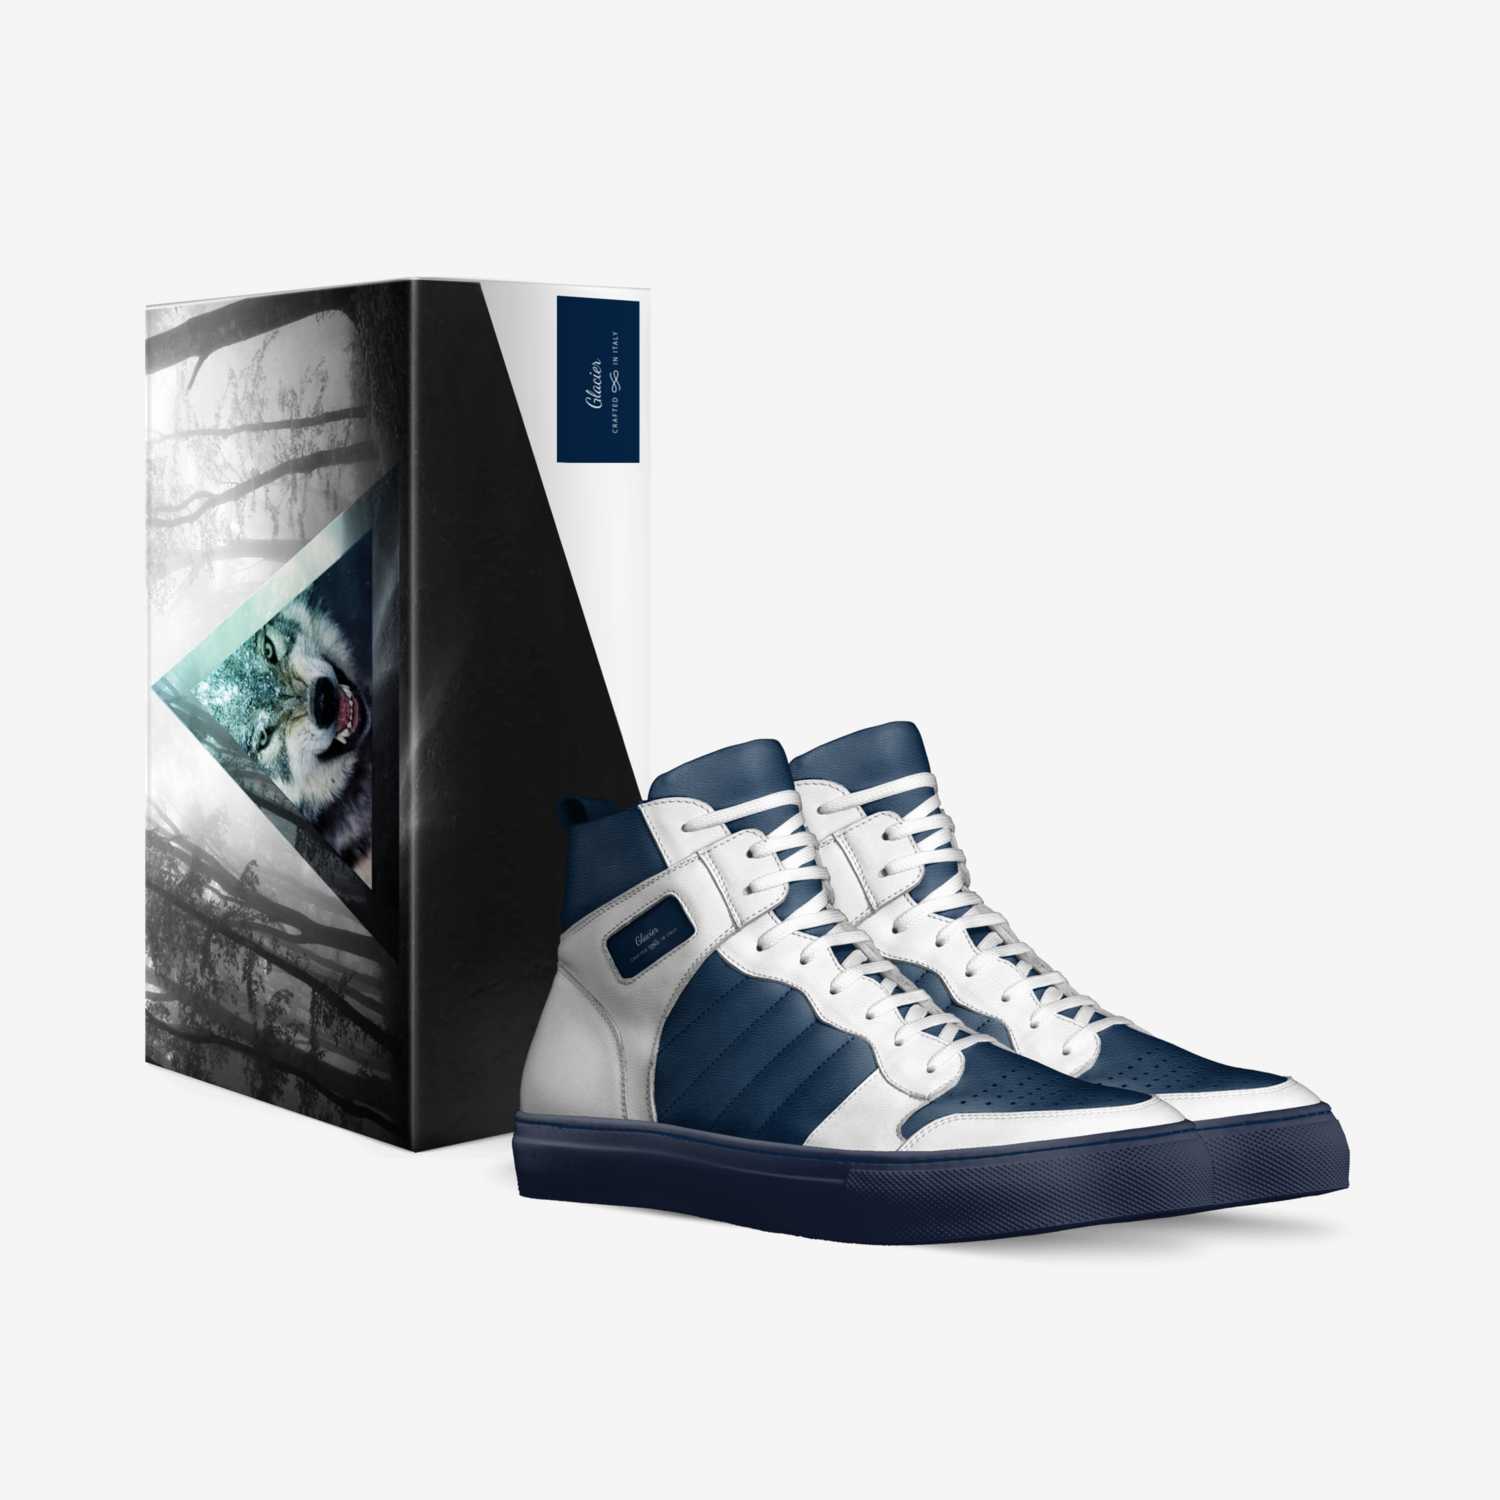 Glacier  custom made in Italy shoes by David Chatman Jr | Box view